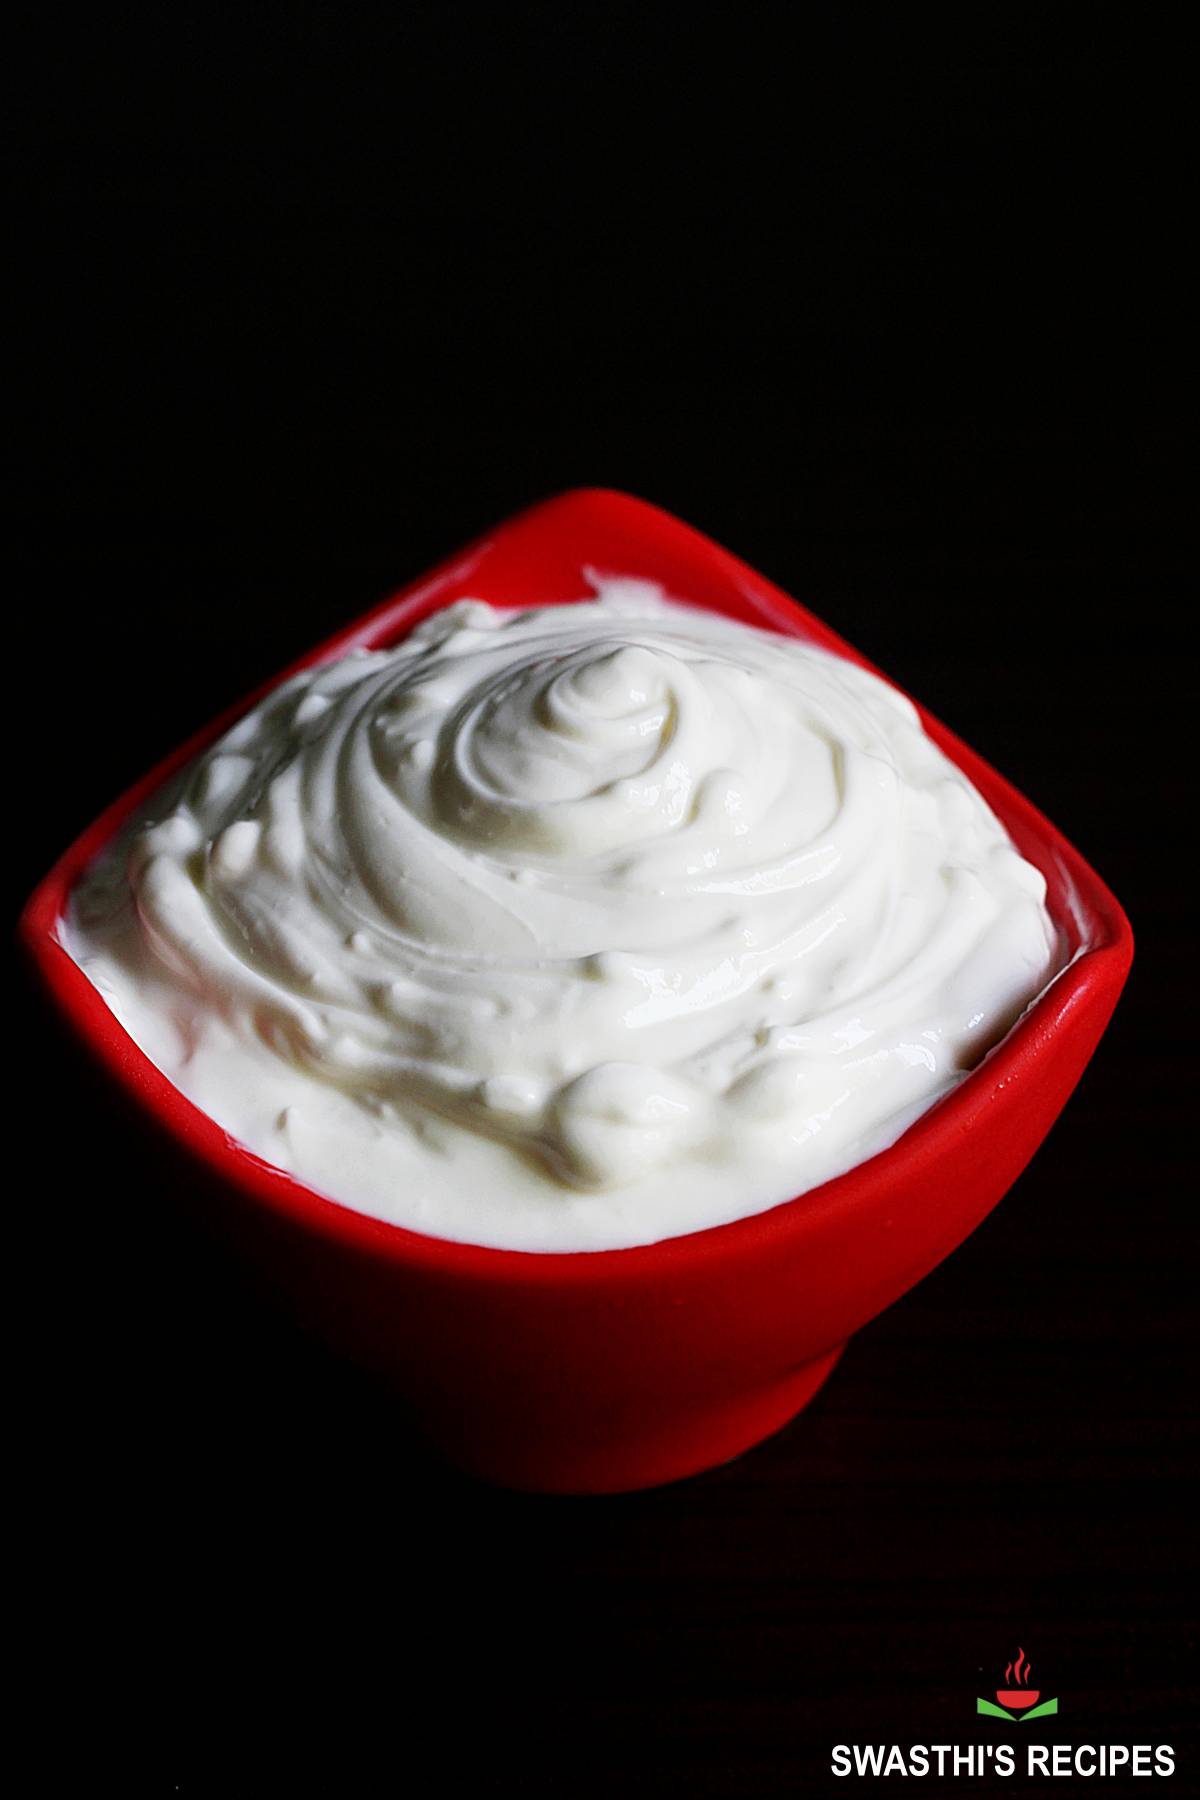 Hing curd made with fresh homemade yogurt